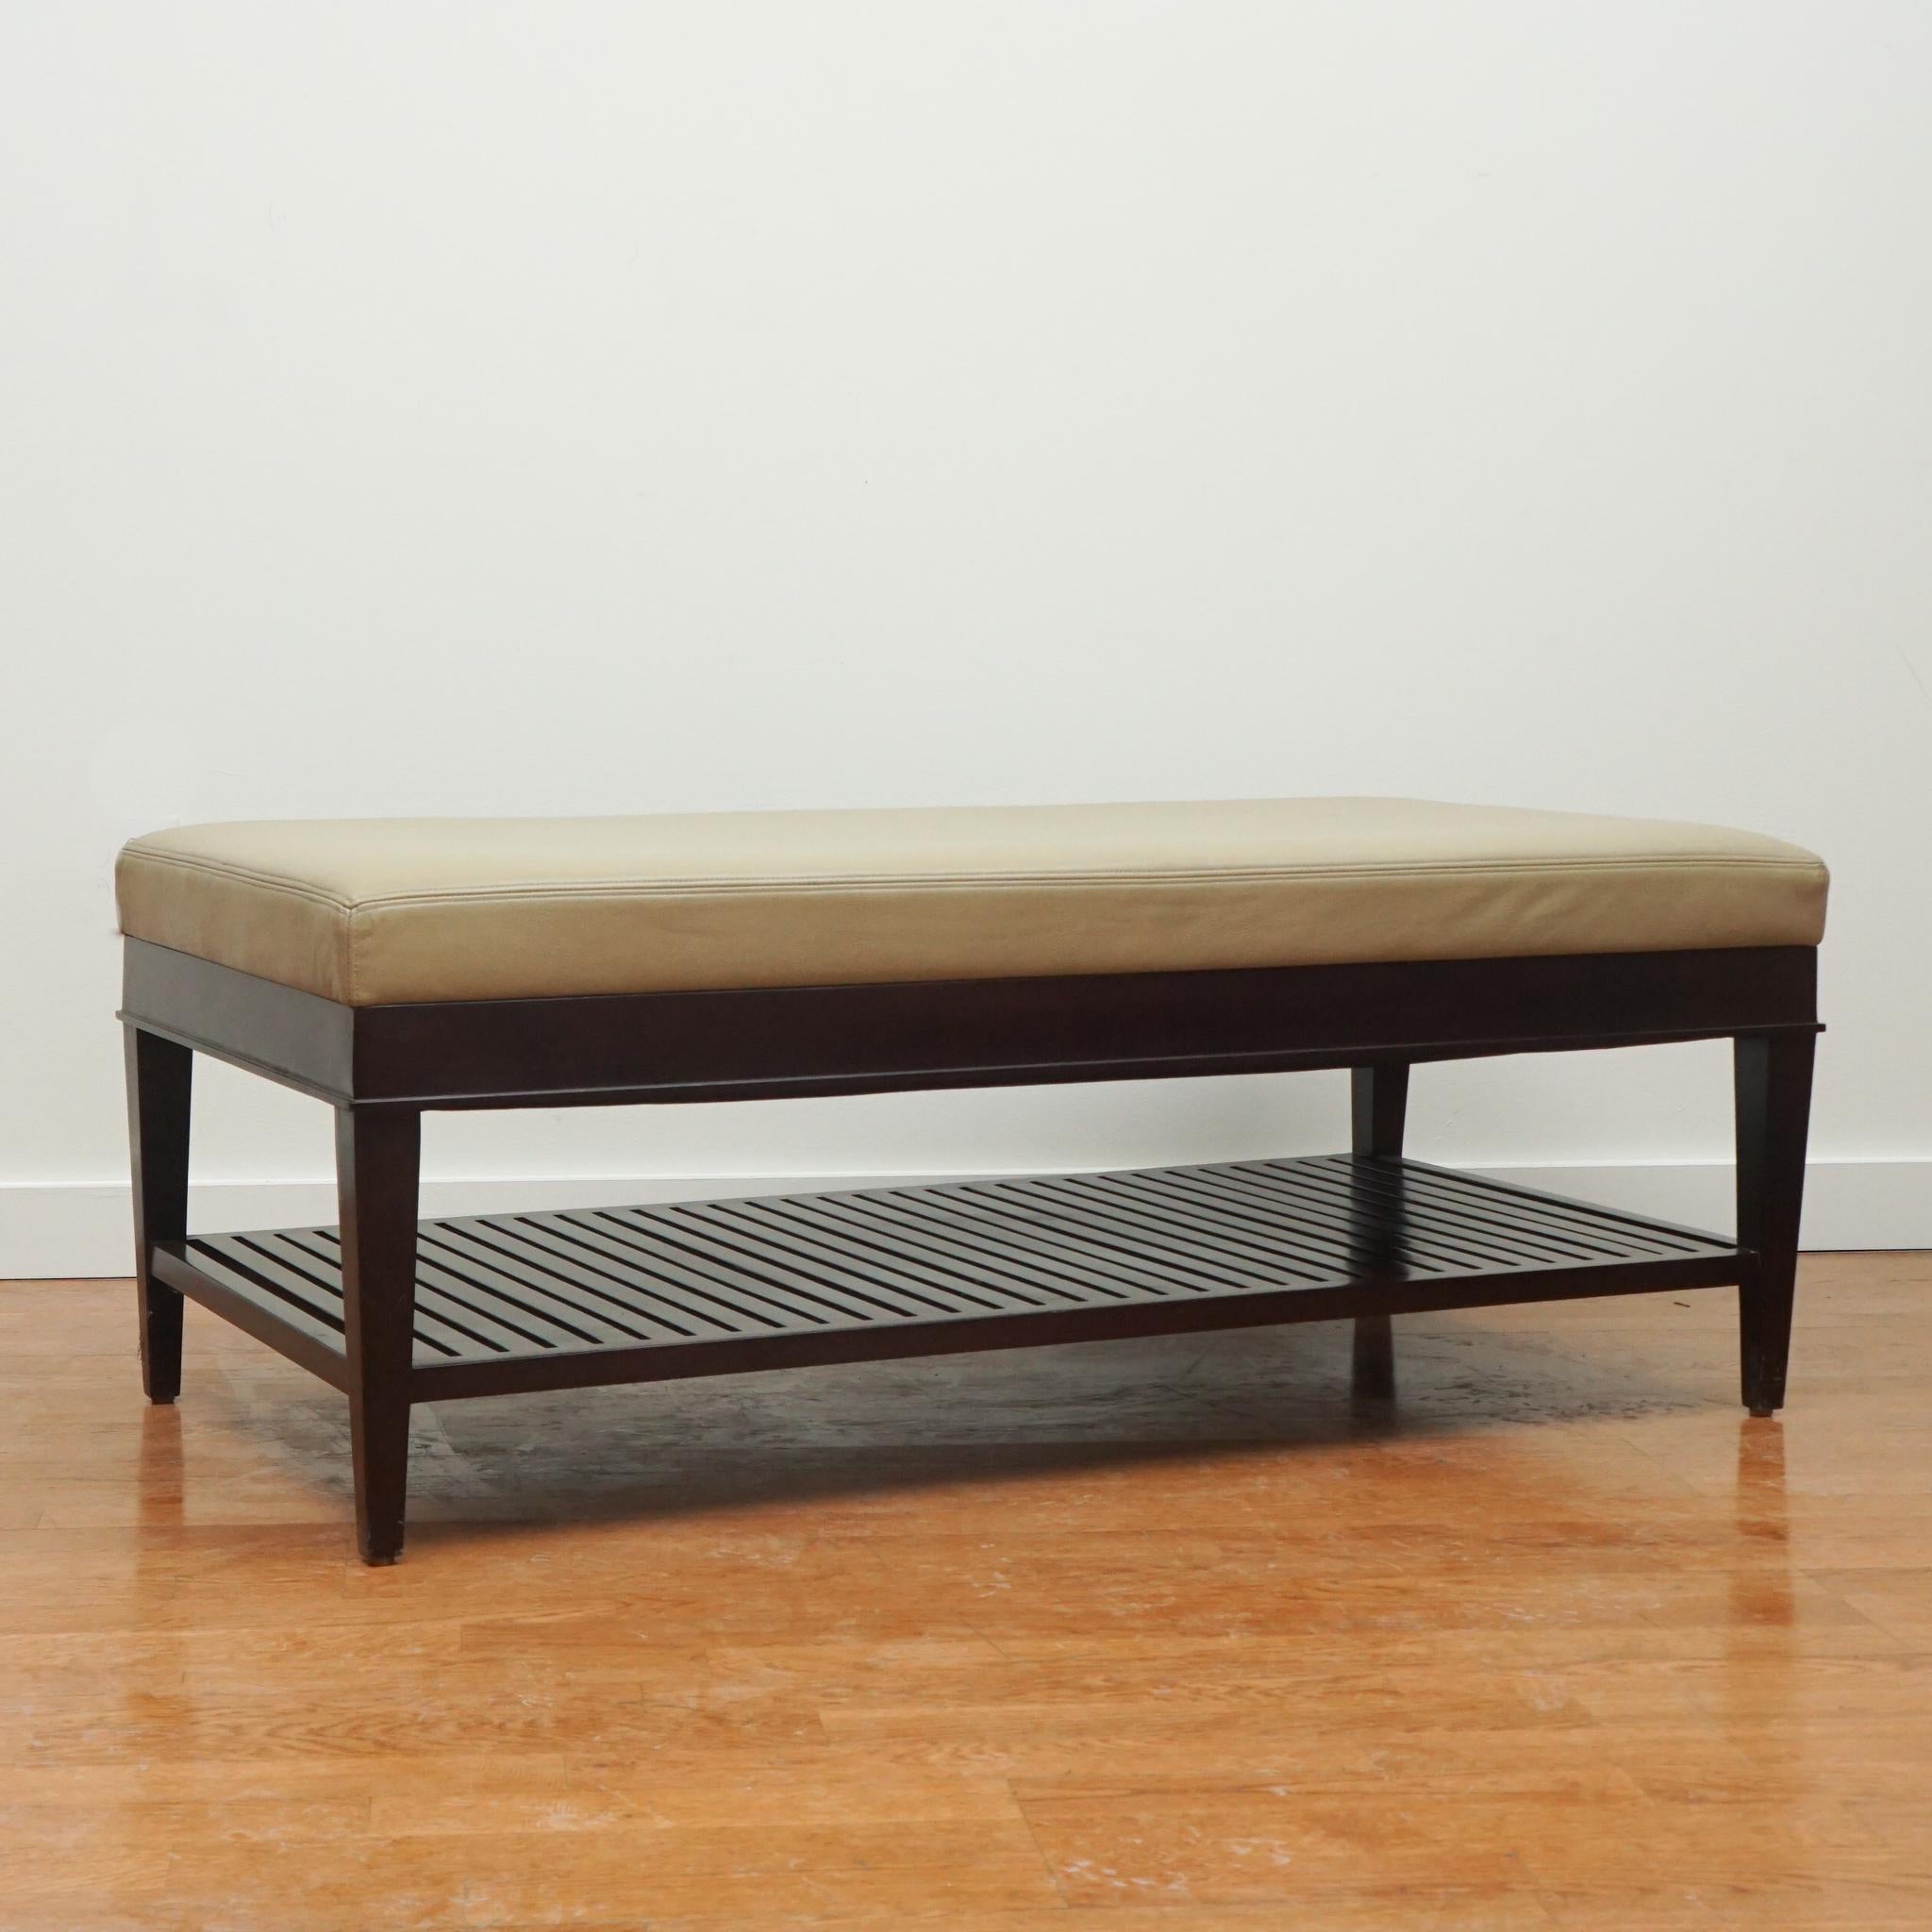 Machine-Made A. Rudin Leather Bench/Ottoman with Slat Bottom Shelf